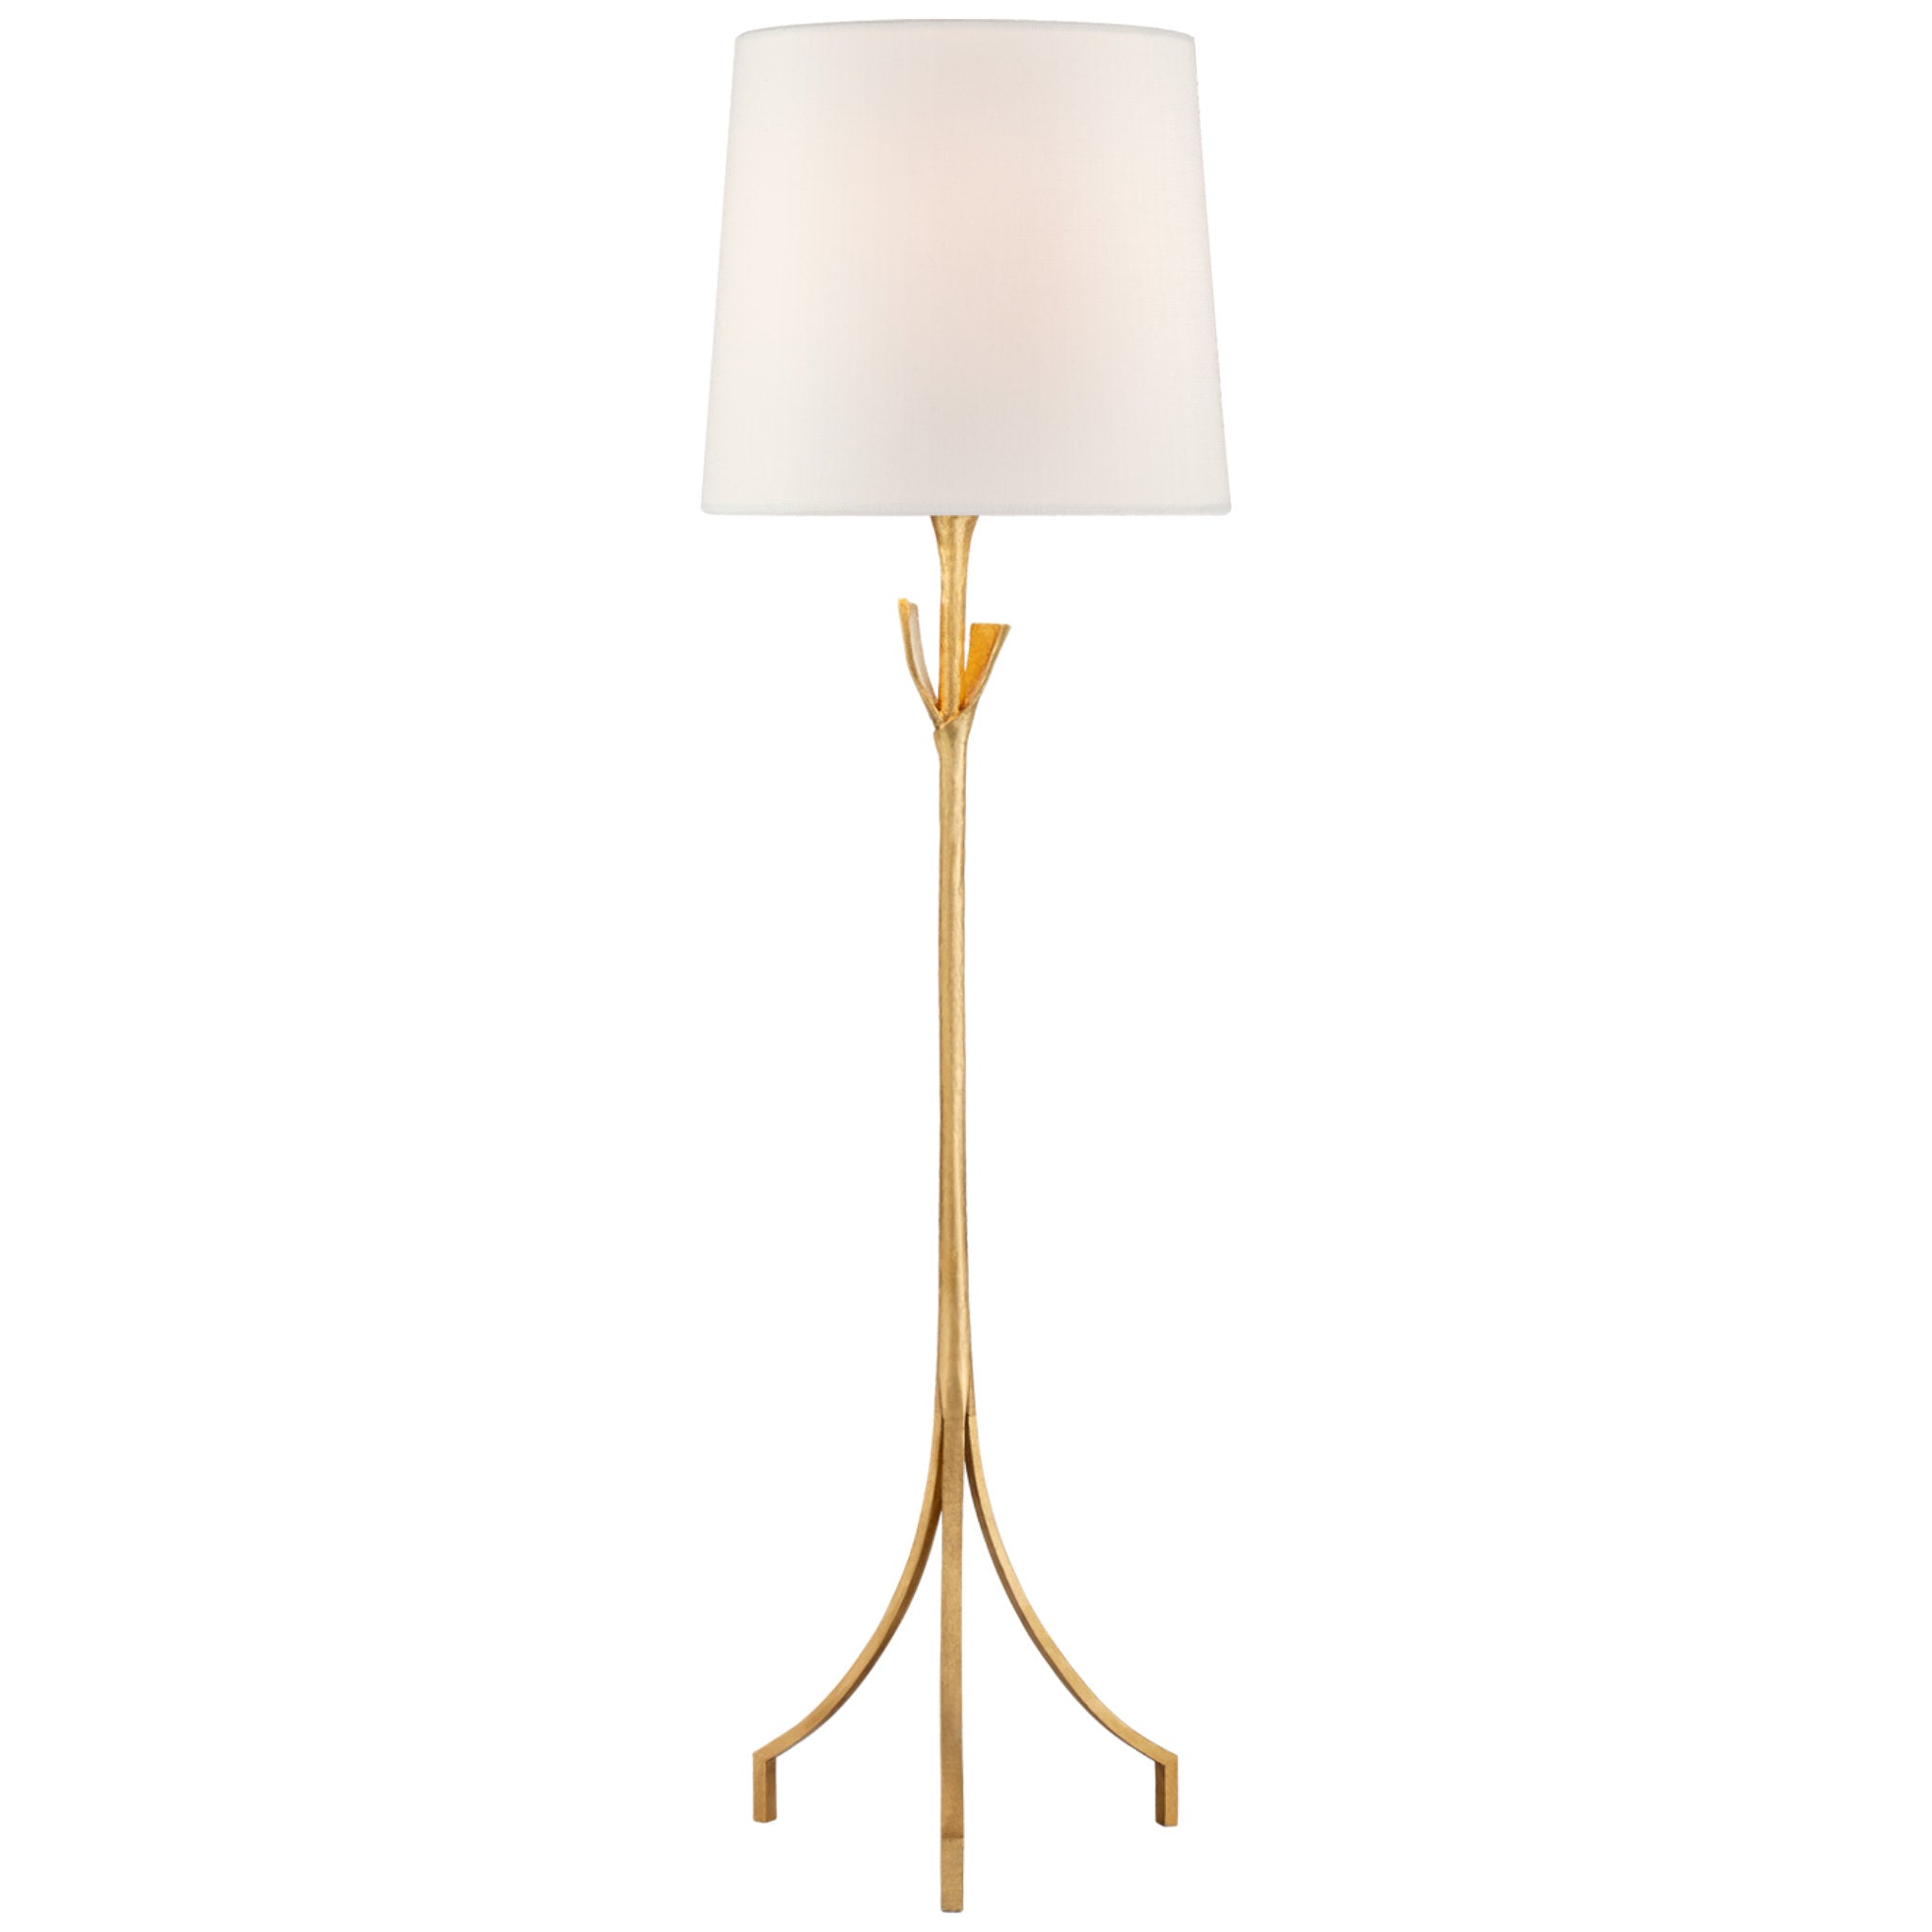 AERIN Fliana Floor Lamp in Gild with Linen Shade